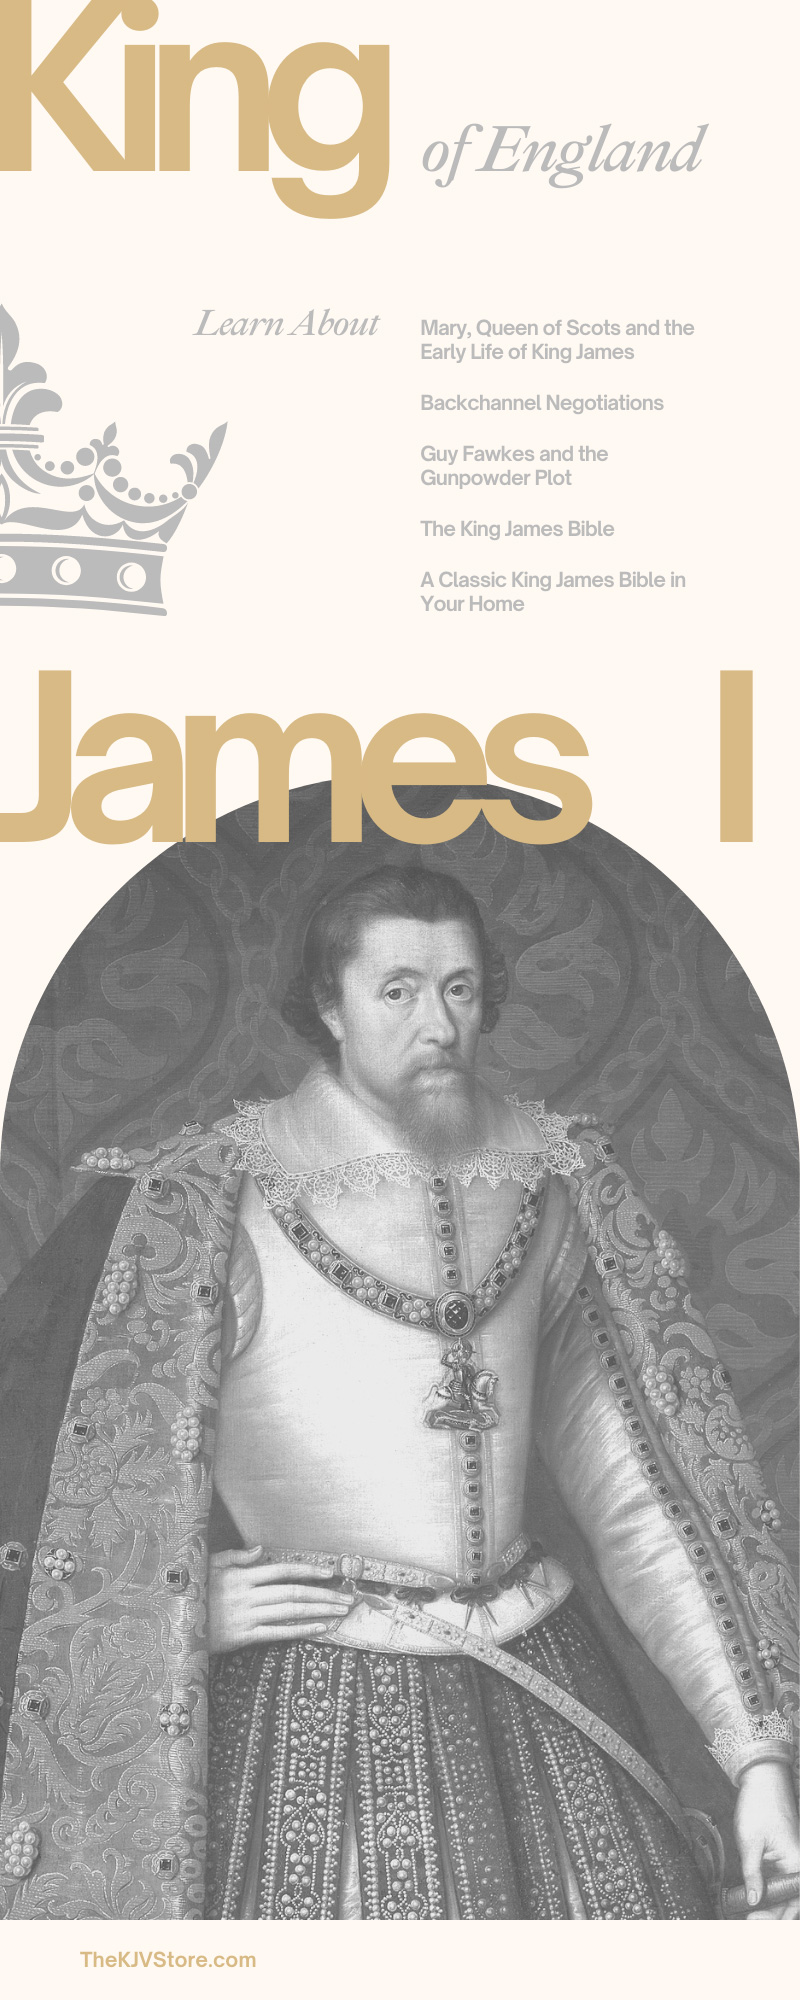 Who Was King James I of England?